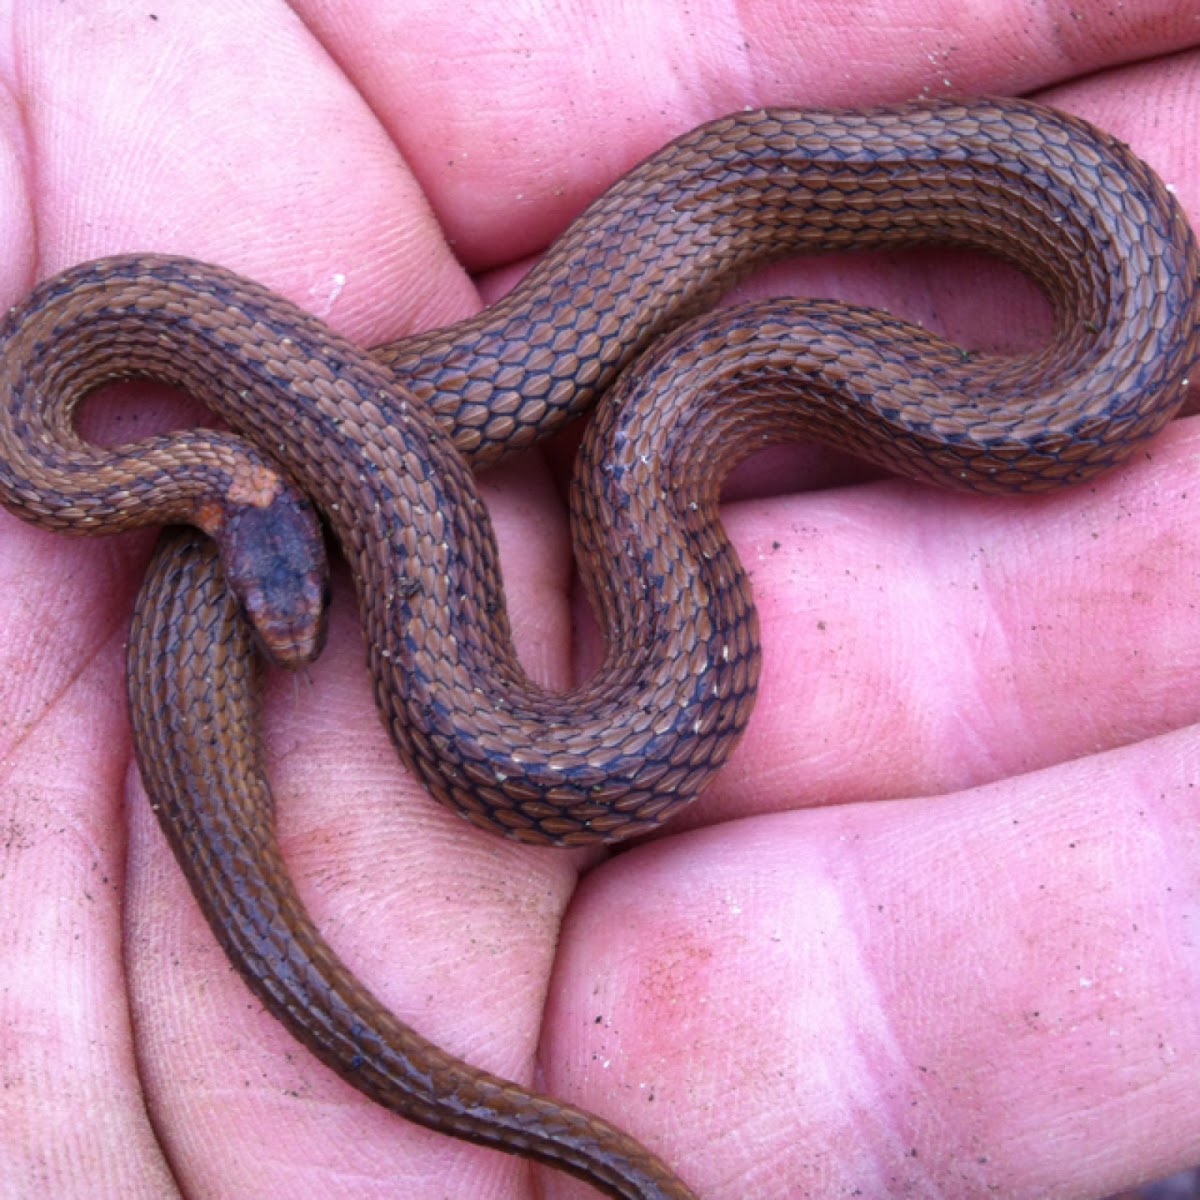 Redbelly snake